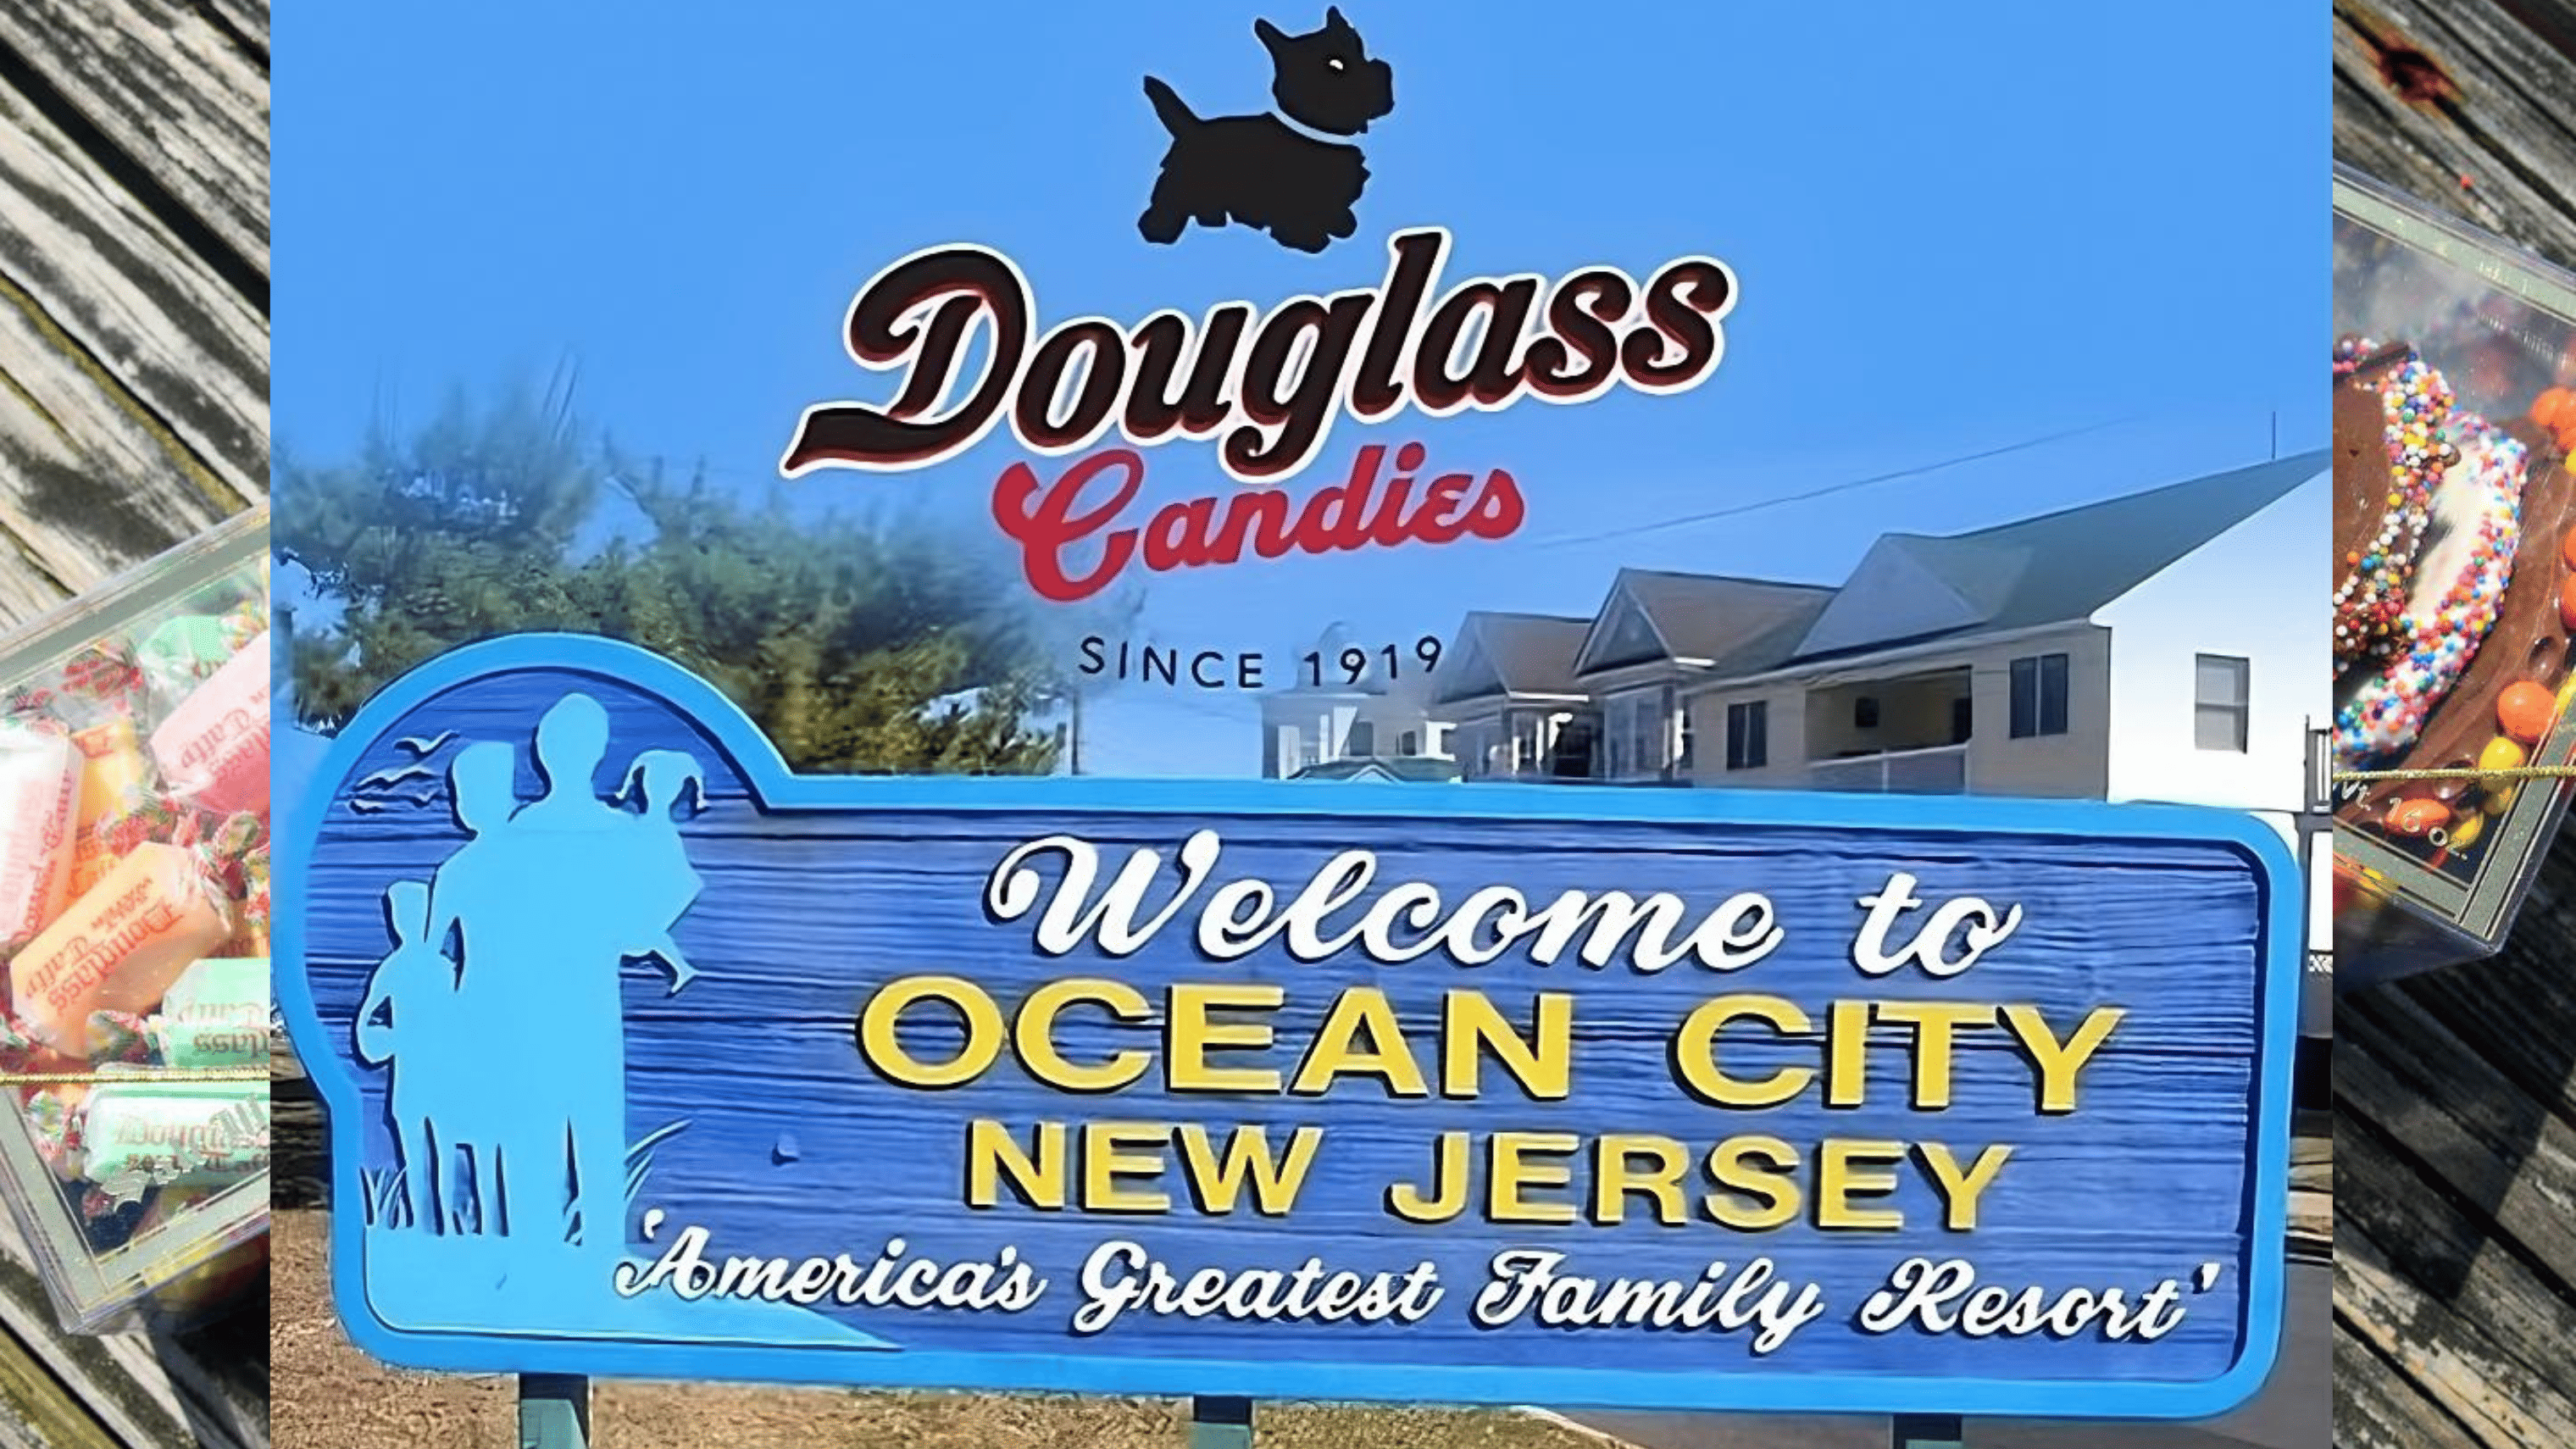 Douglass Candies is Expanding to Ocean City